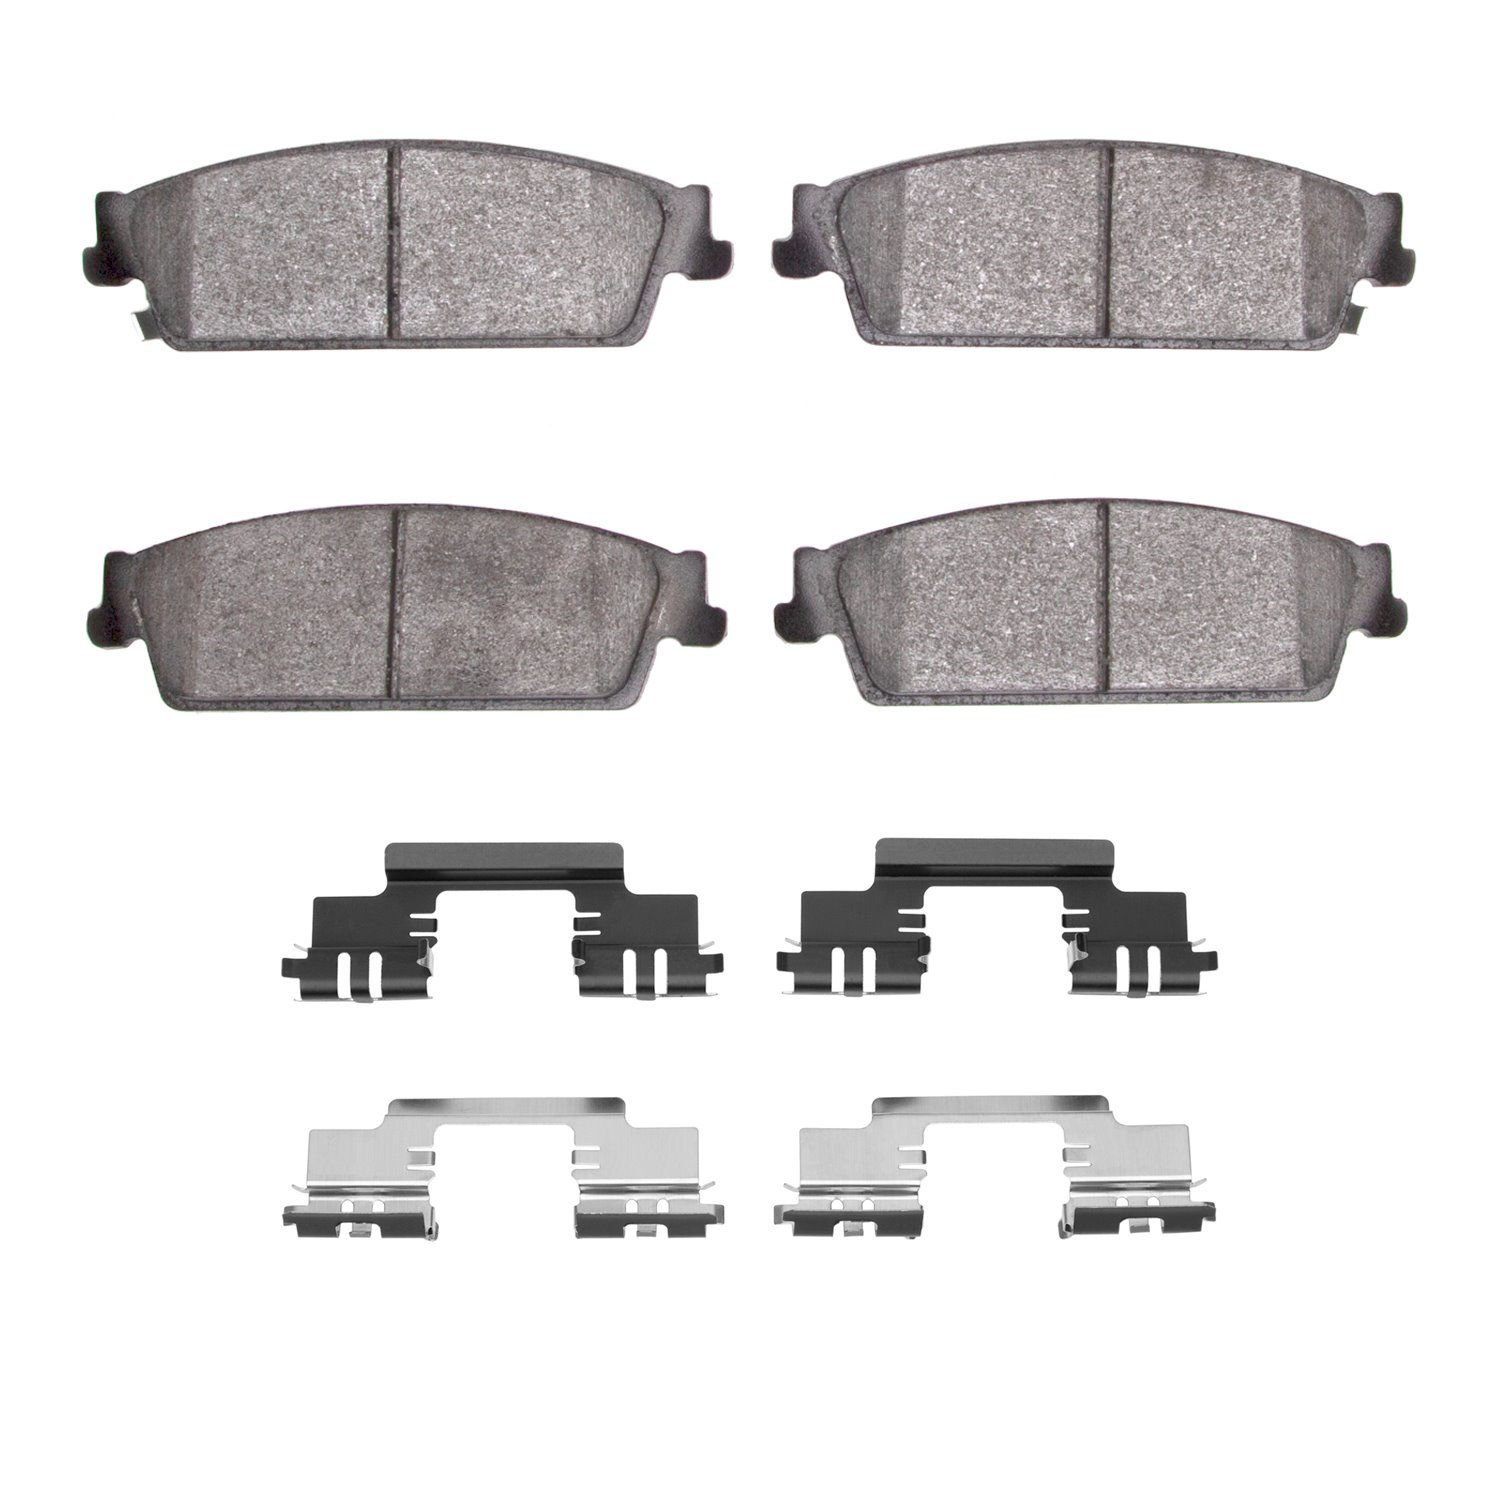 1551-1194-01 5000 Advanced Ceramic Brake Pads & Hardware Kit, 2007-2014 GM, Position: Rear